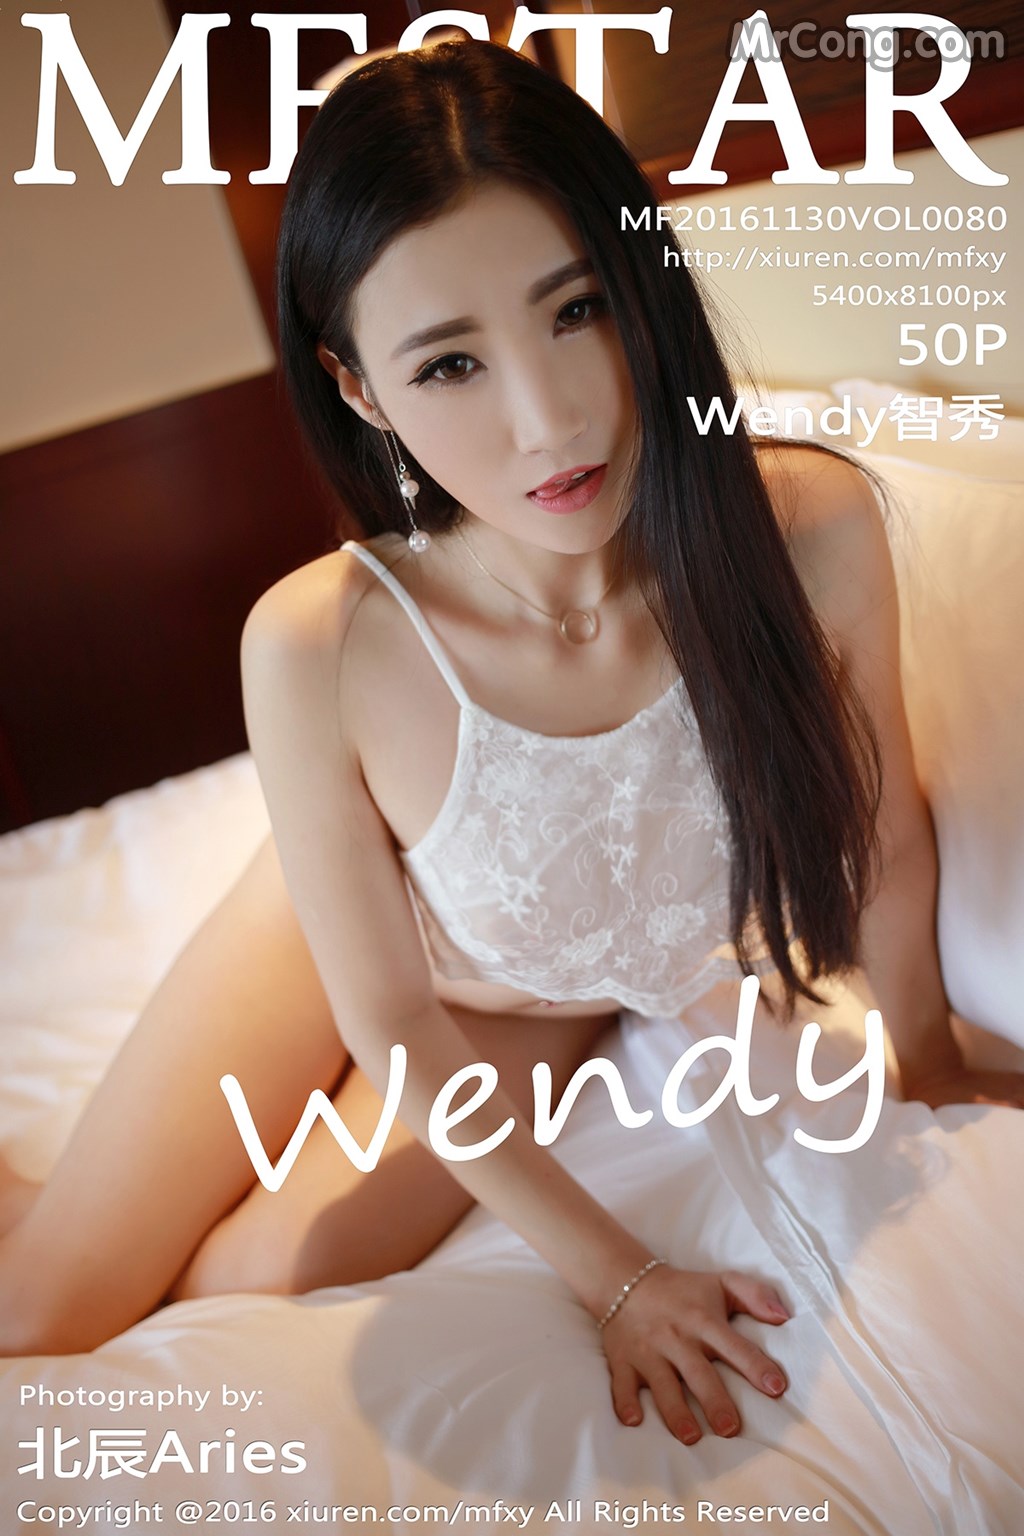 MFStar Vol.080: Model Wendy (智 秀) (51 photos)